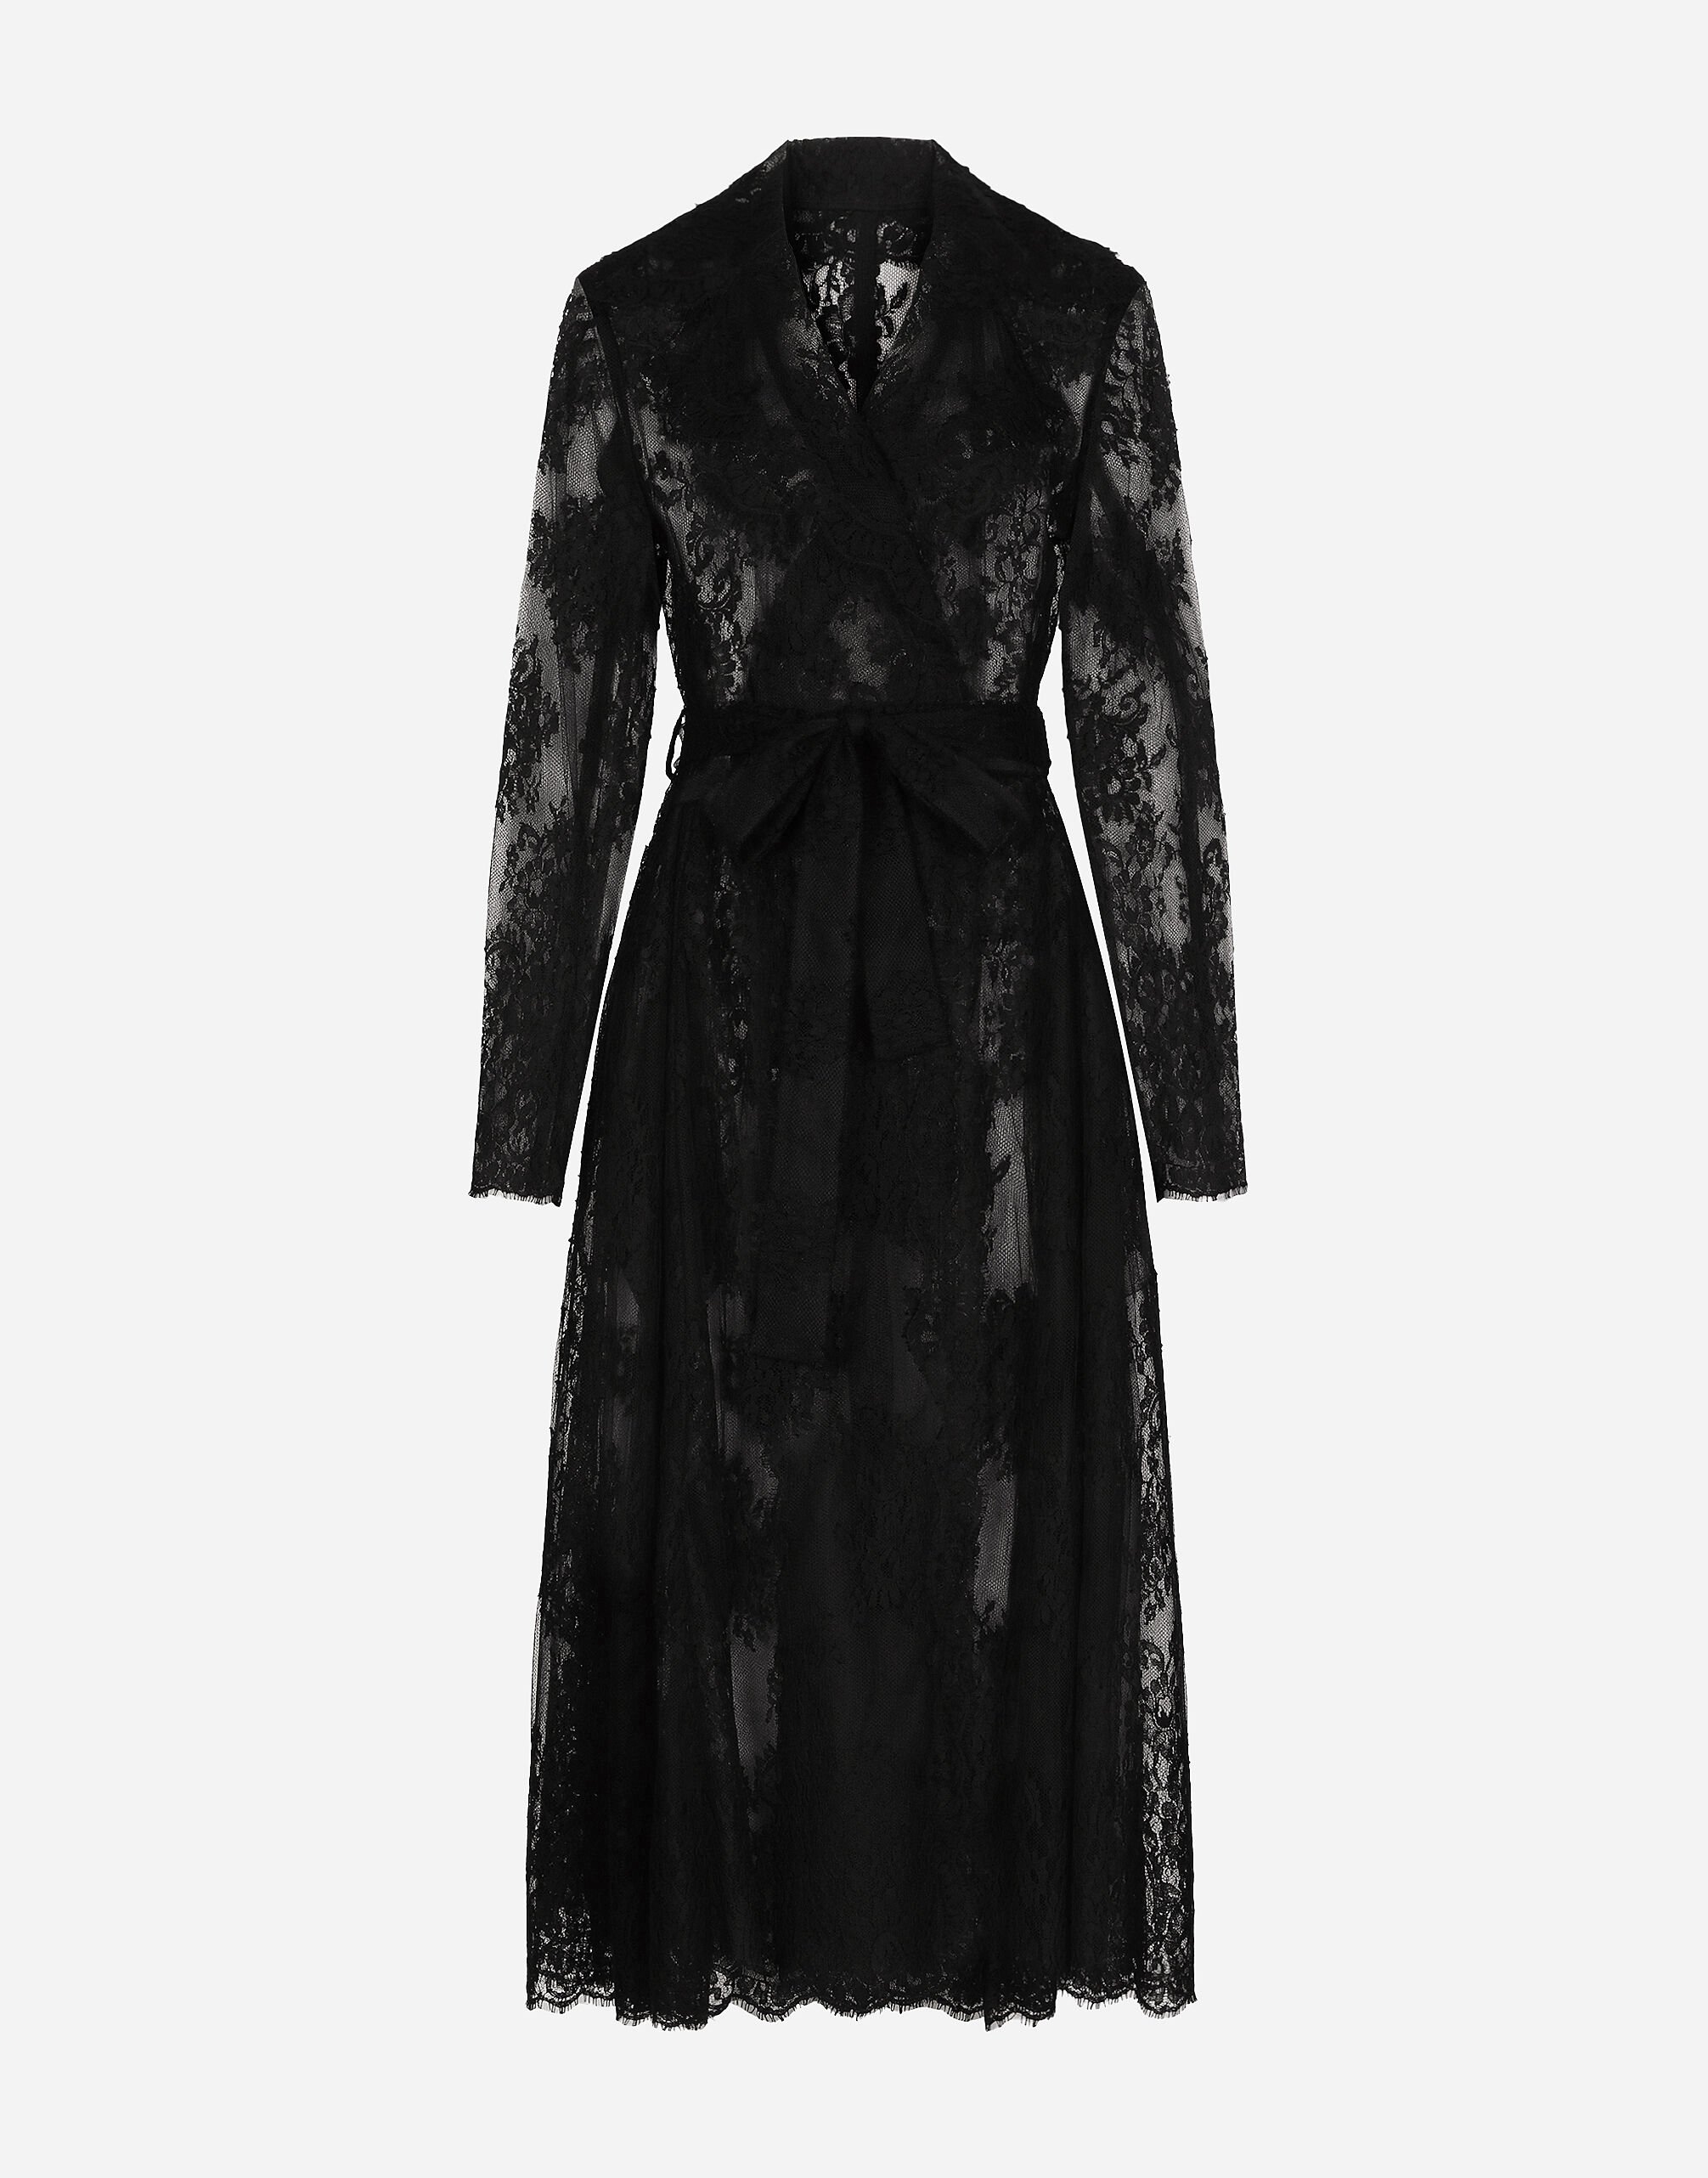 Dolce & Gabbana Chantilly lace coat with belt Black F0D1OTFUMG9